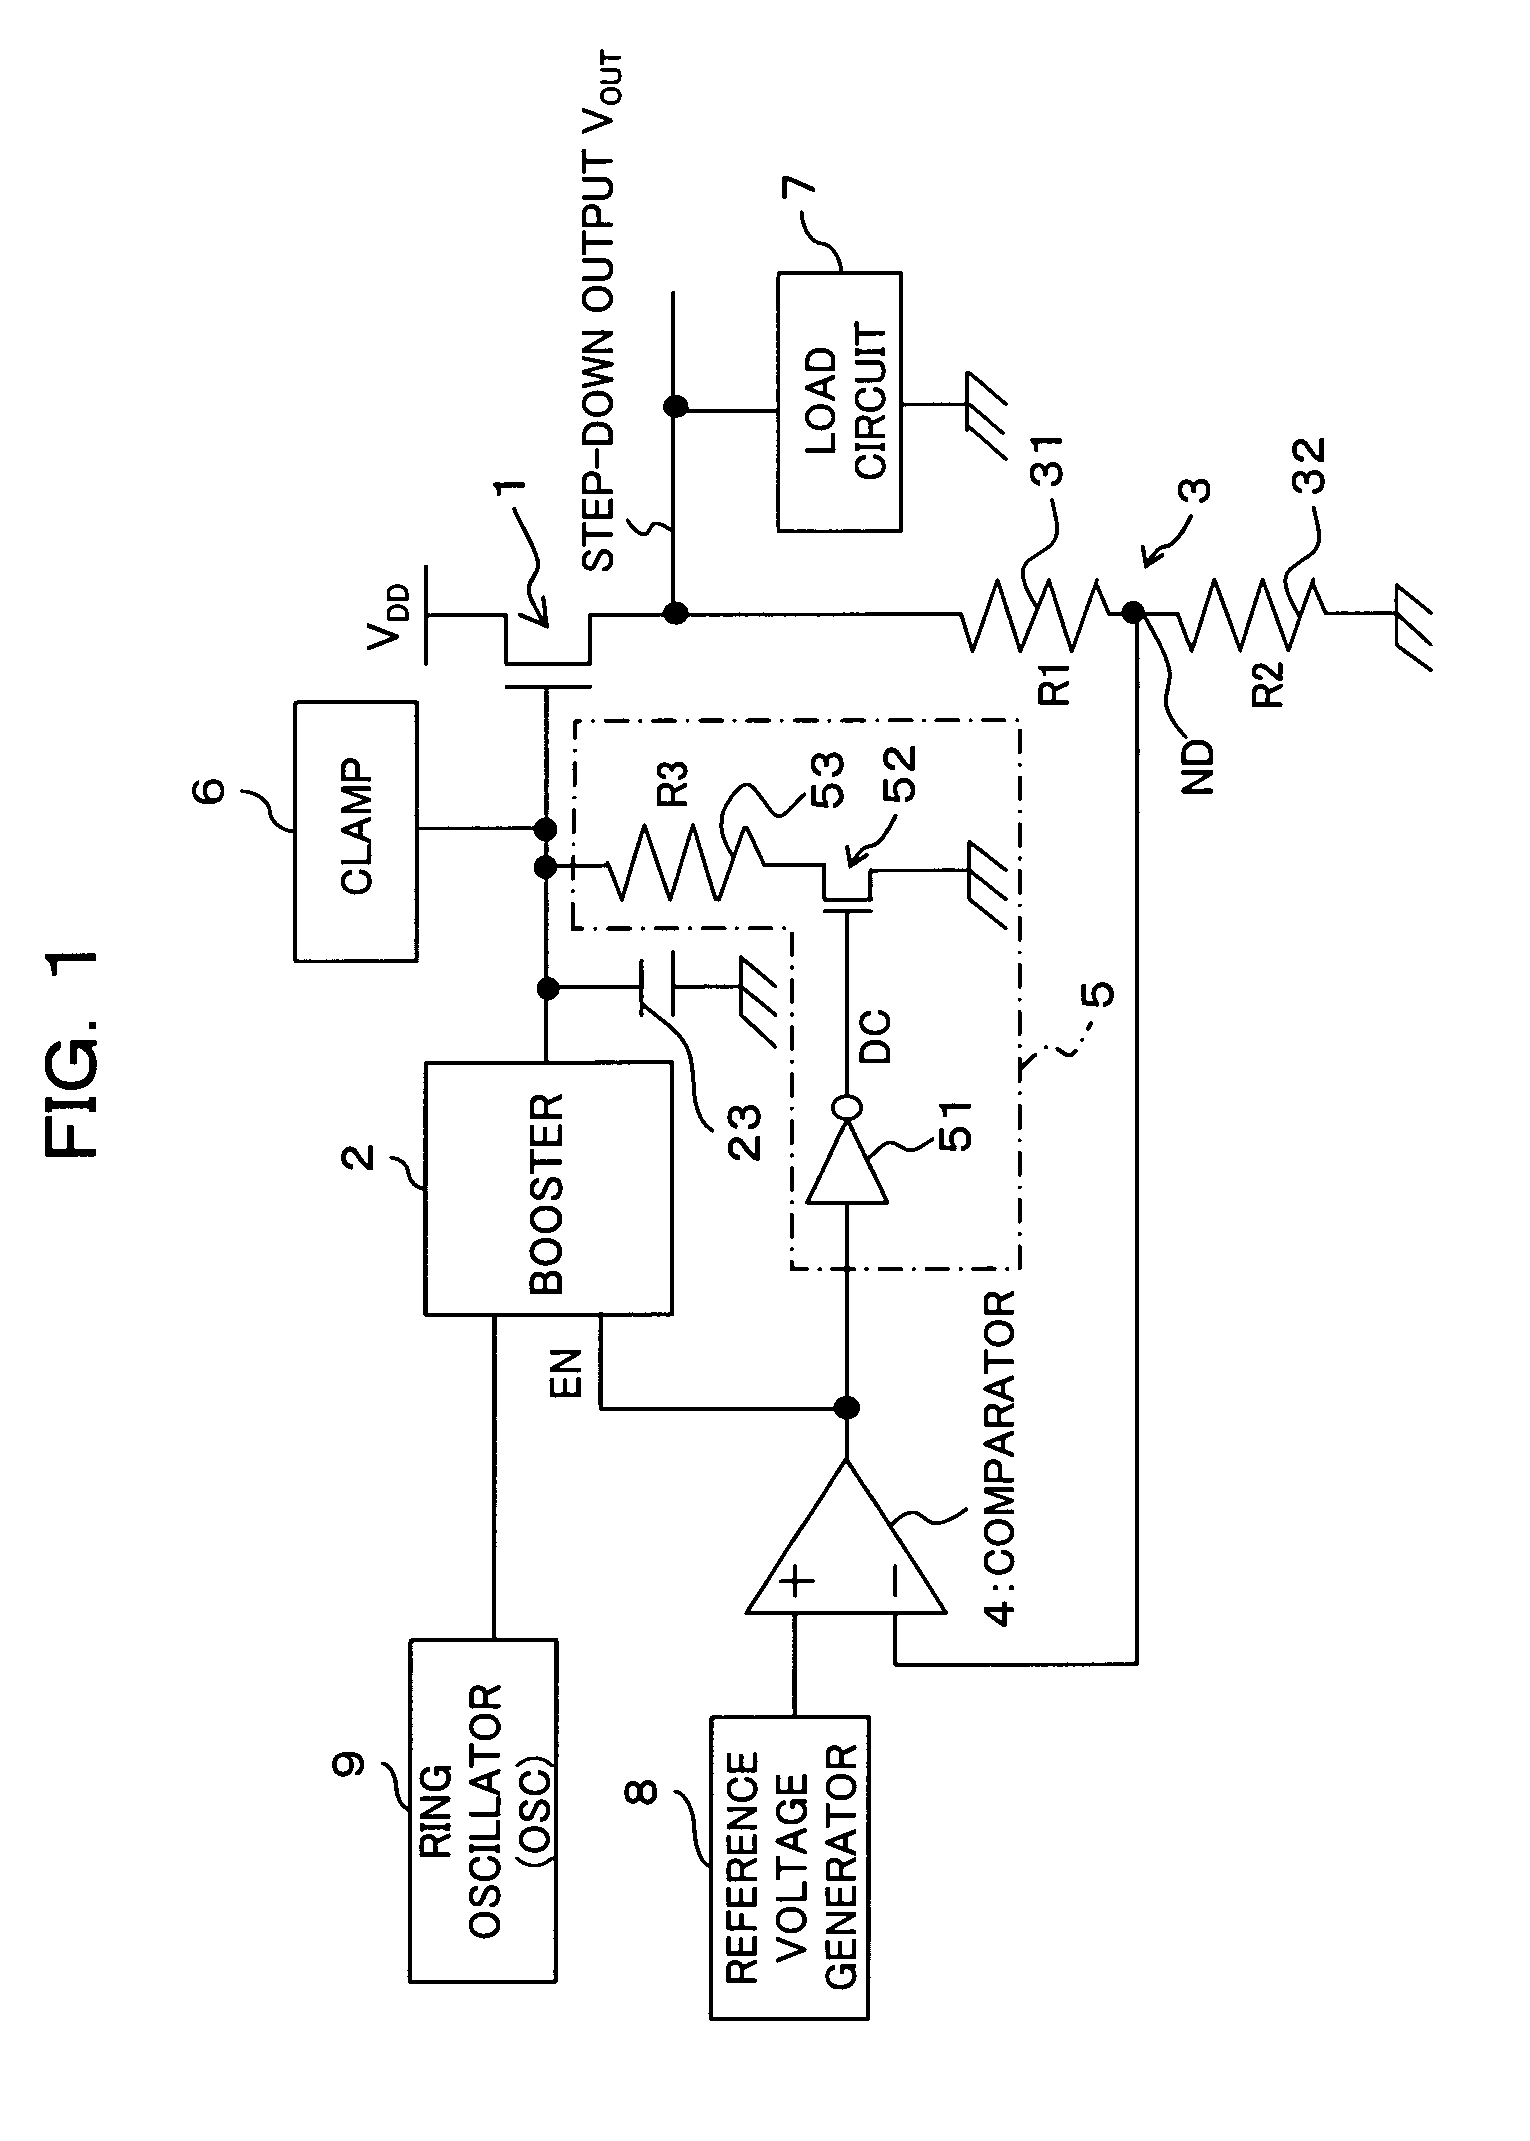 Linear regulator with discharging gate driver